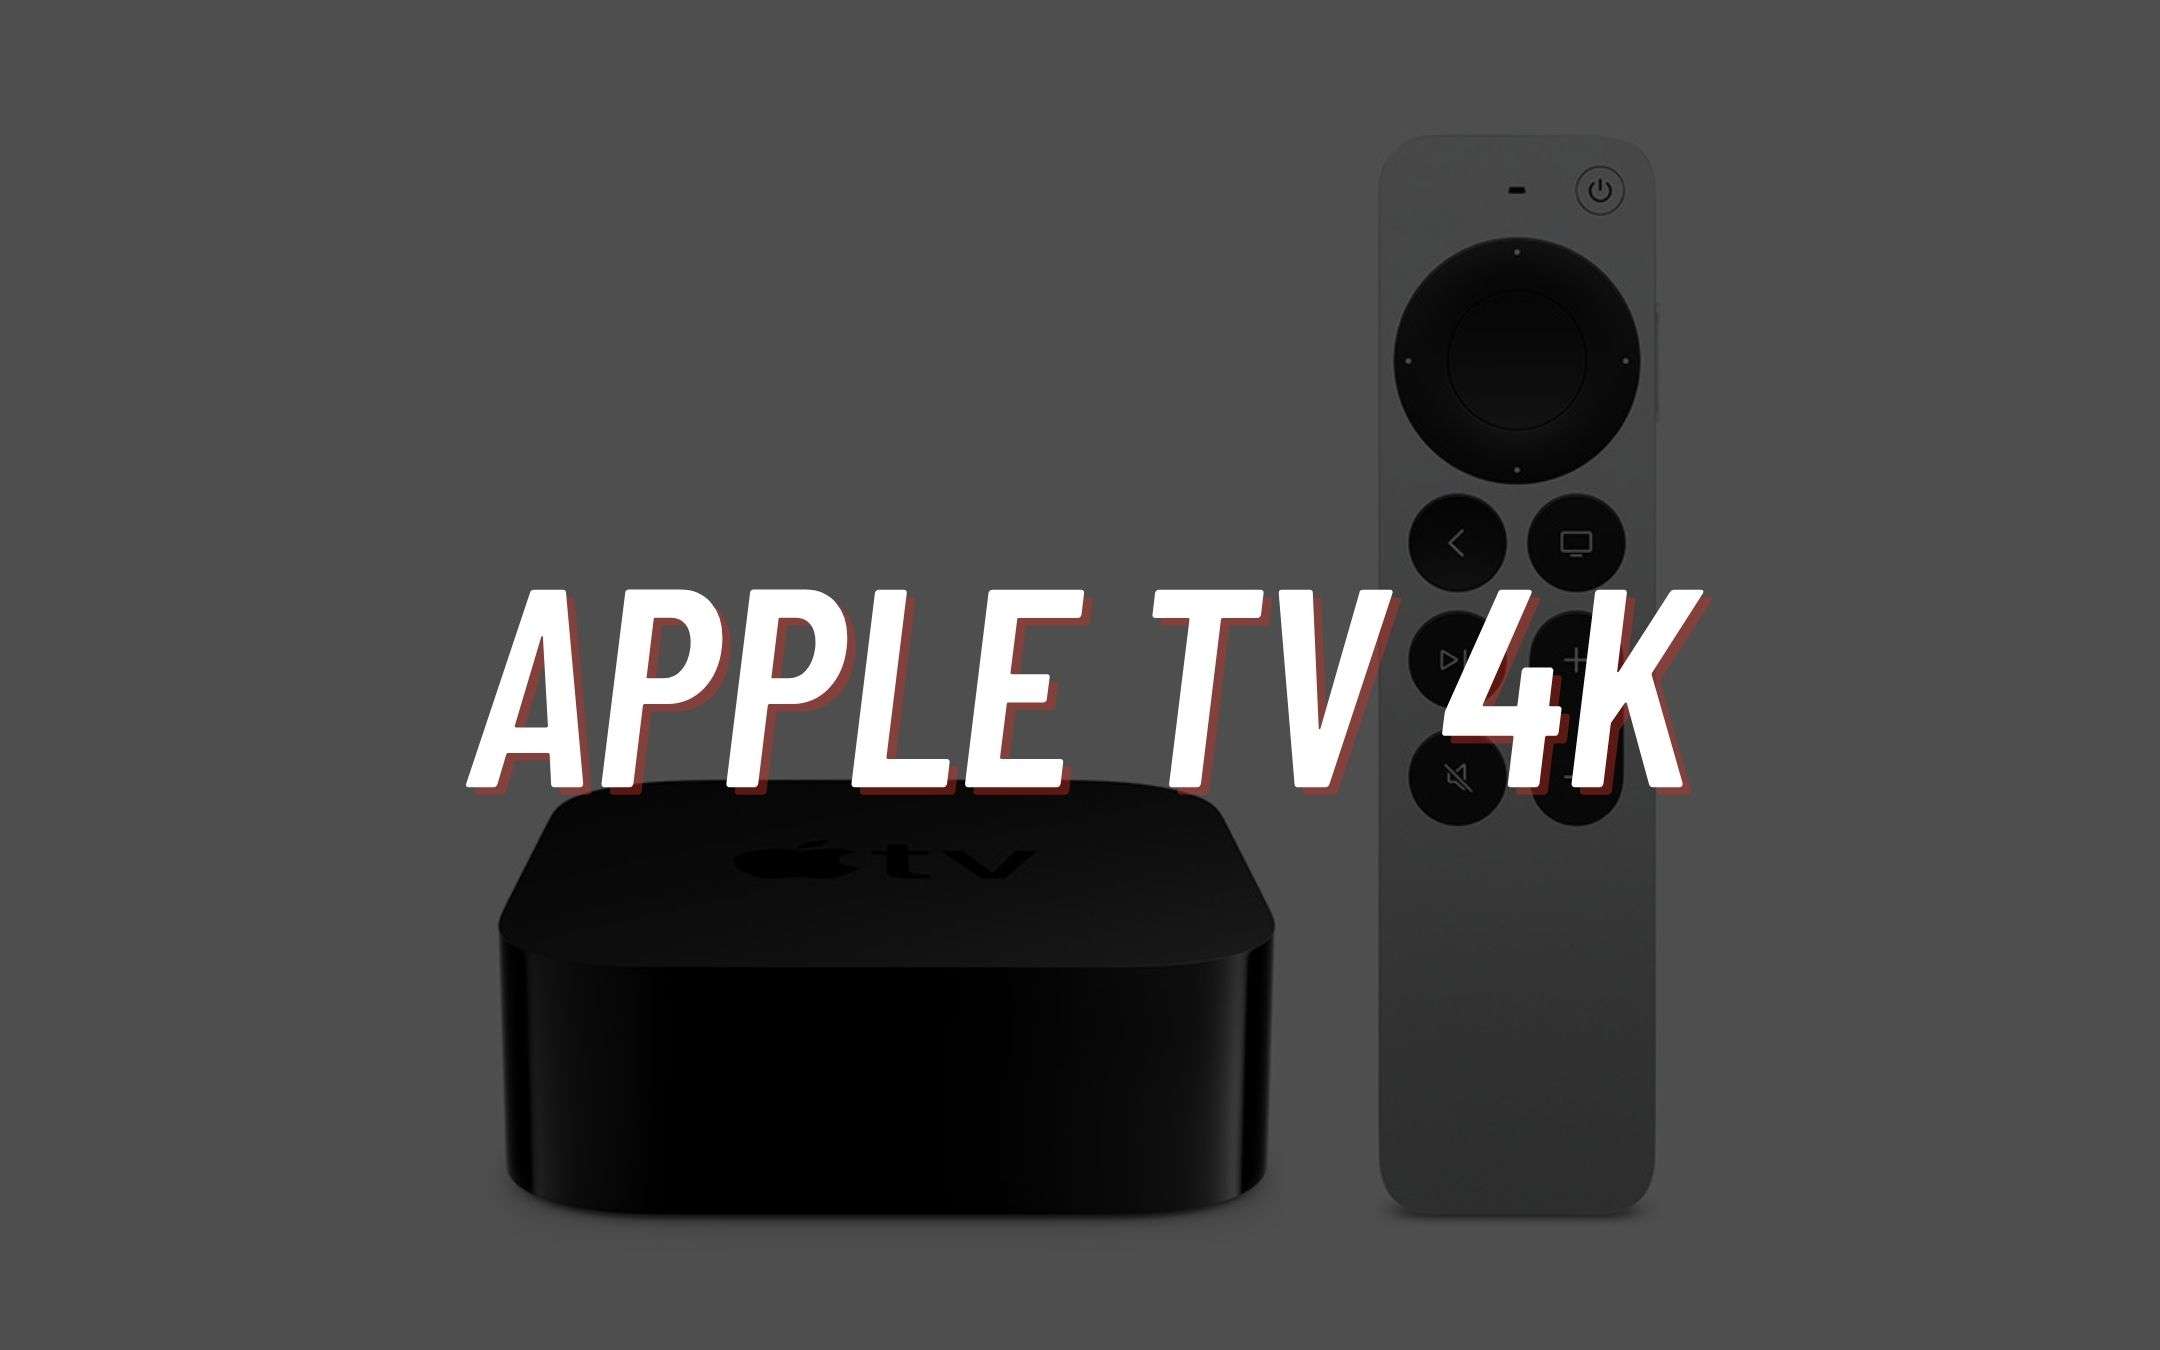 Quando arriva Apple TV 4K? Ecco svelata la data